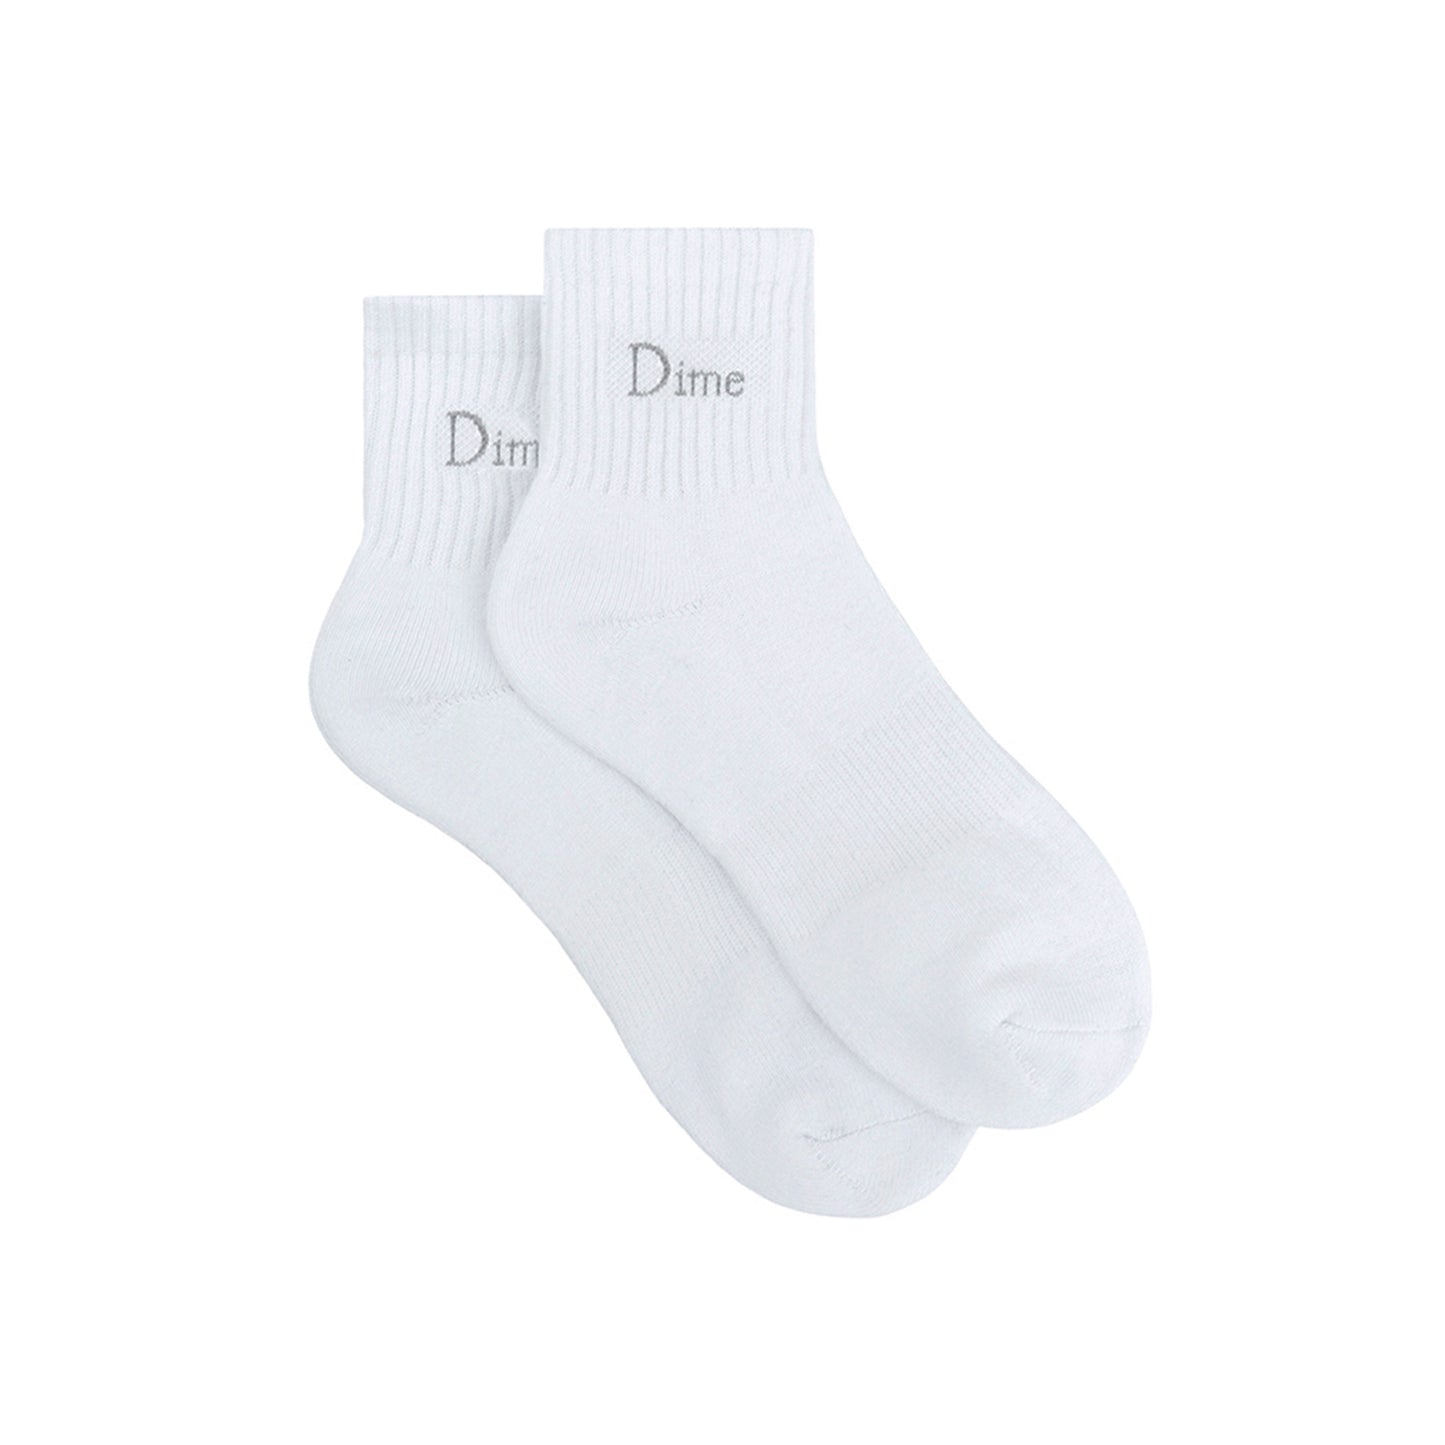 Dime Classic Socks - Assorted Colors